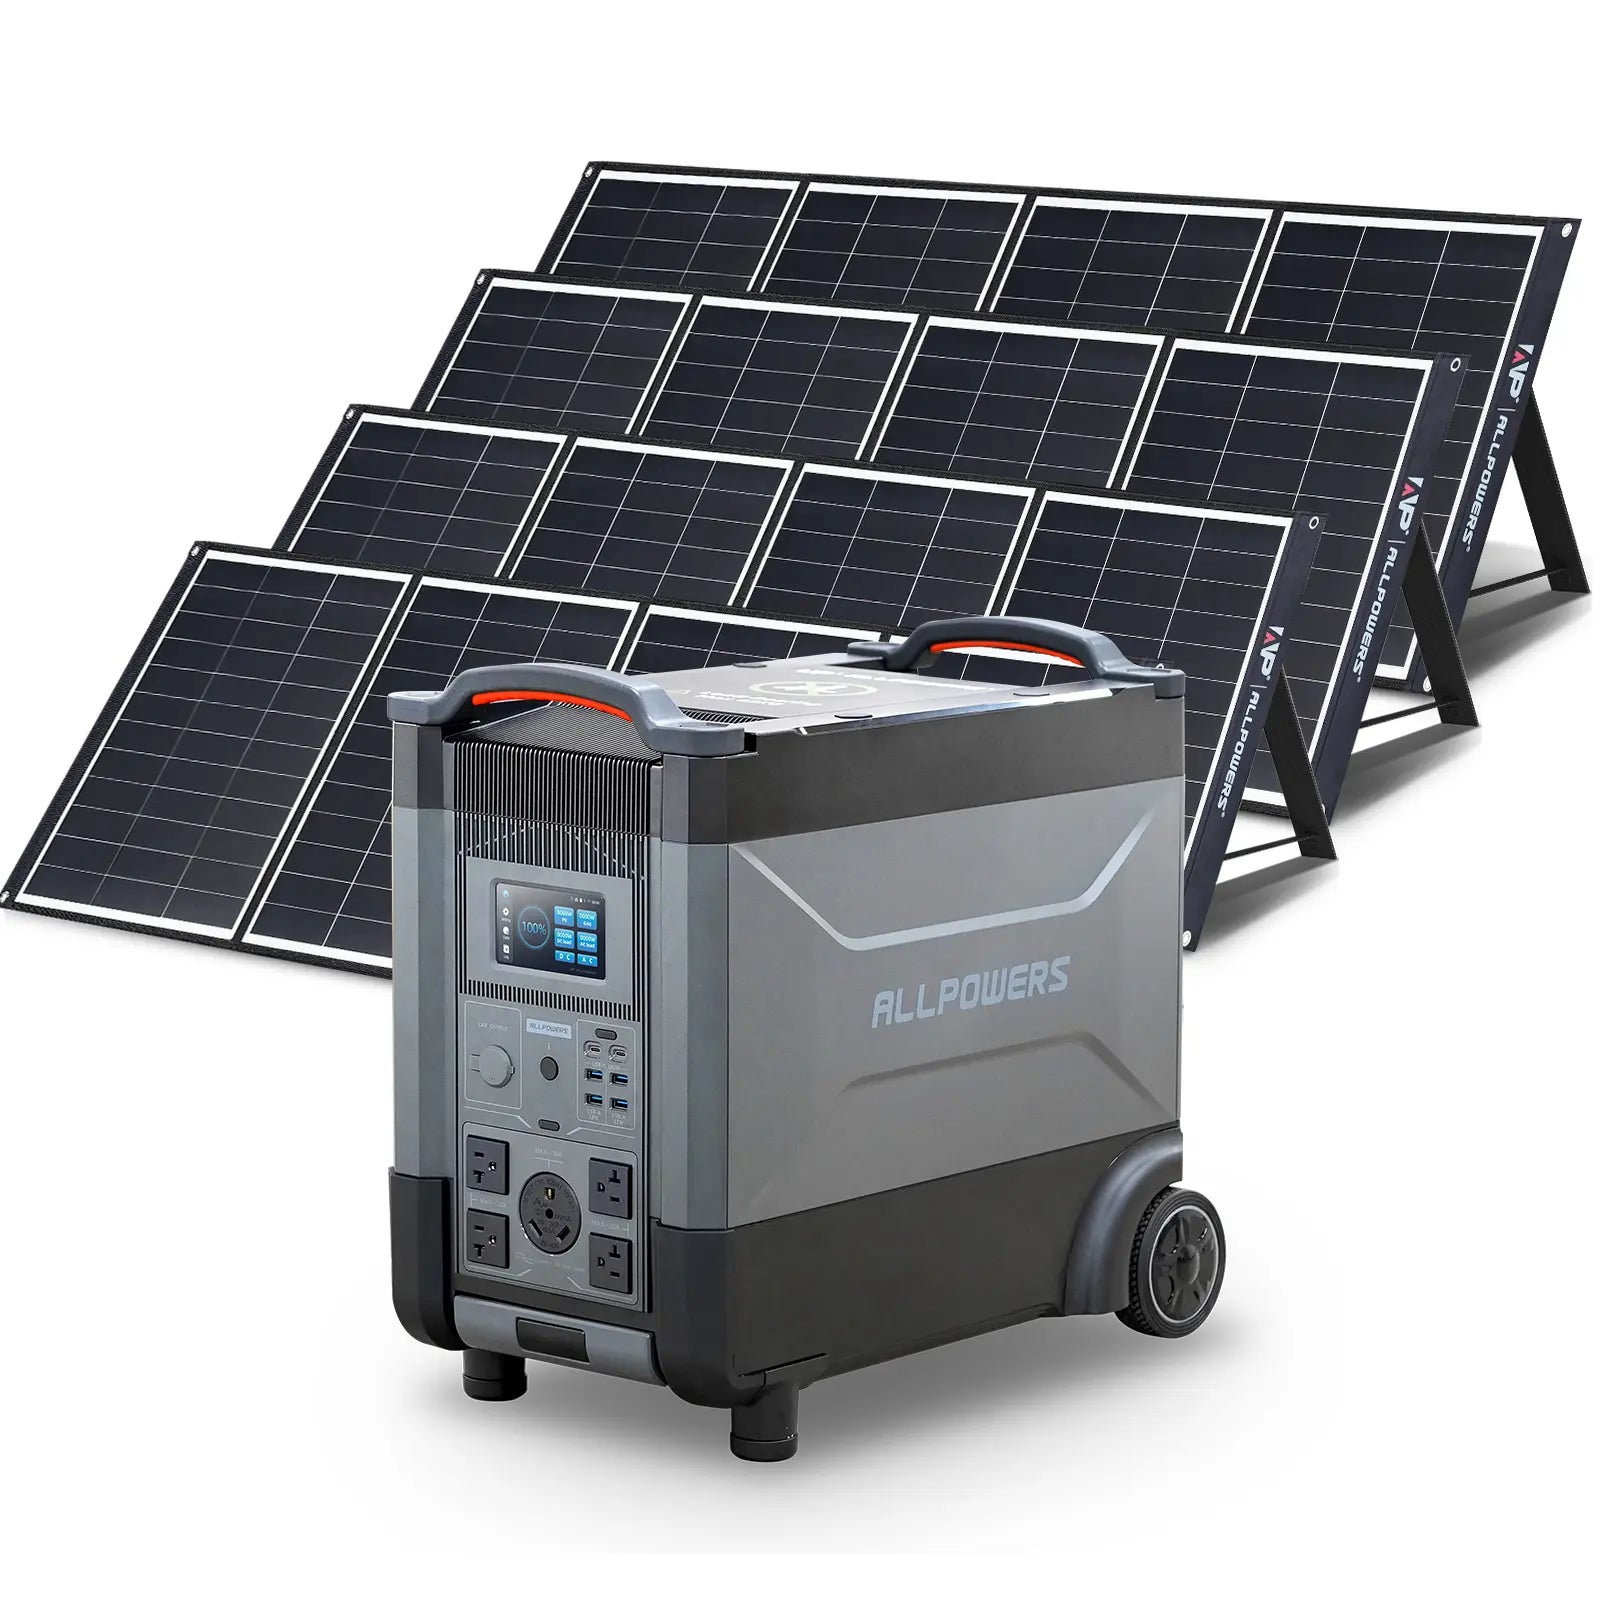 ALLPOWERS Solar Generator Kit 3600W (R4000 + SP035 200W Solar Panel)